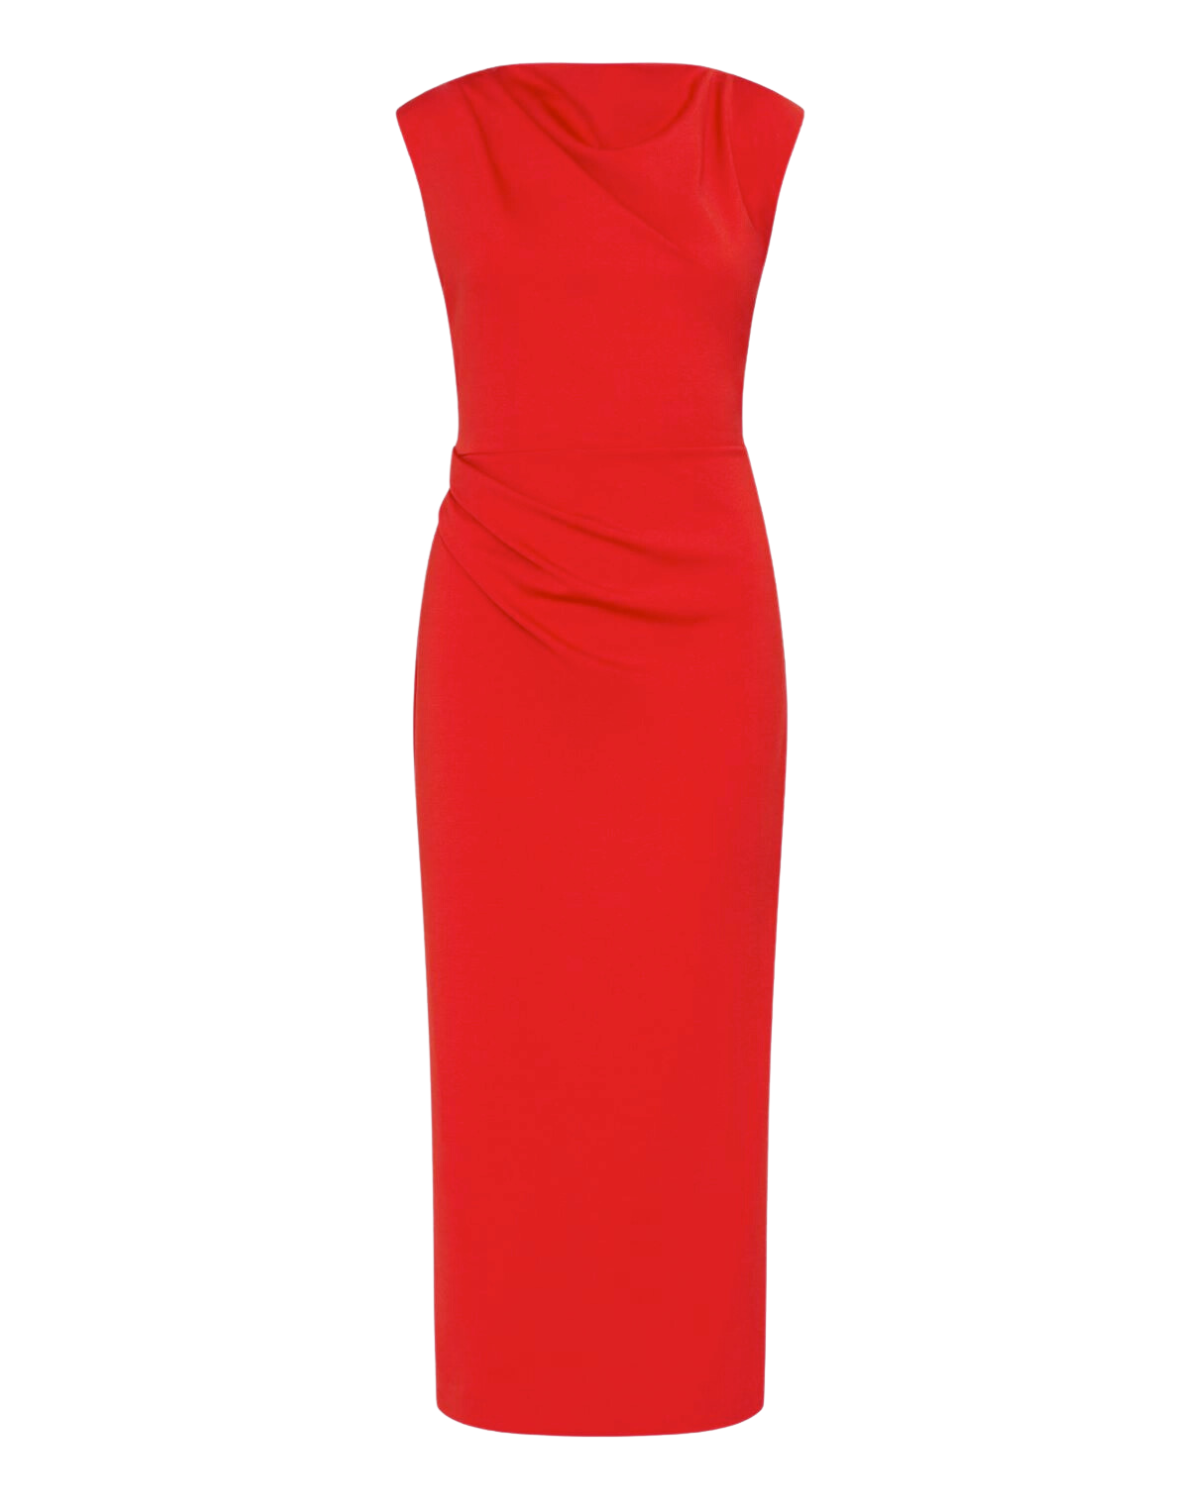 Flo Jersey Midi Dress (Red)